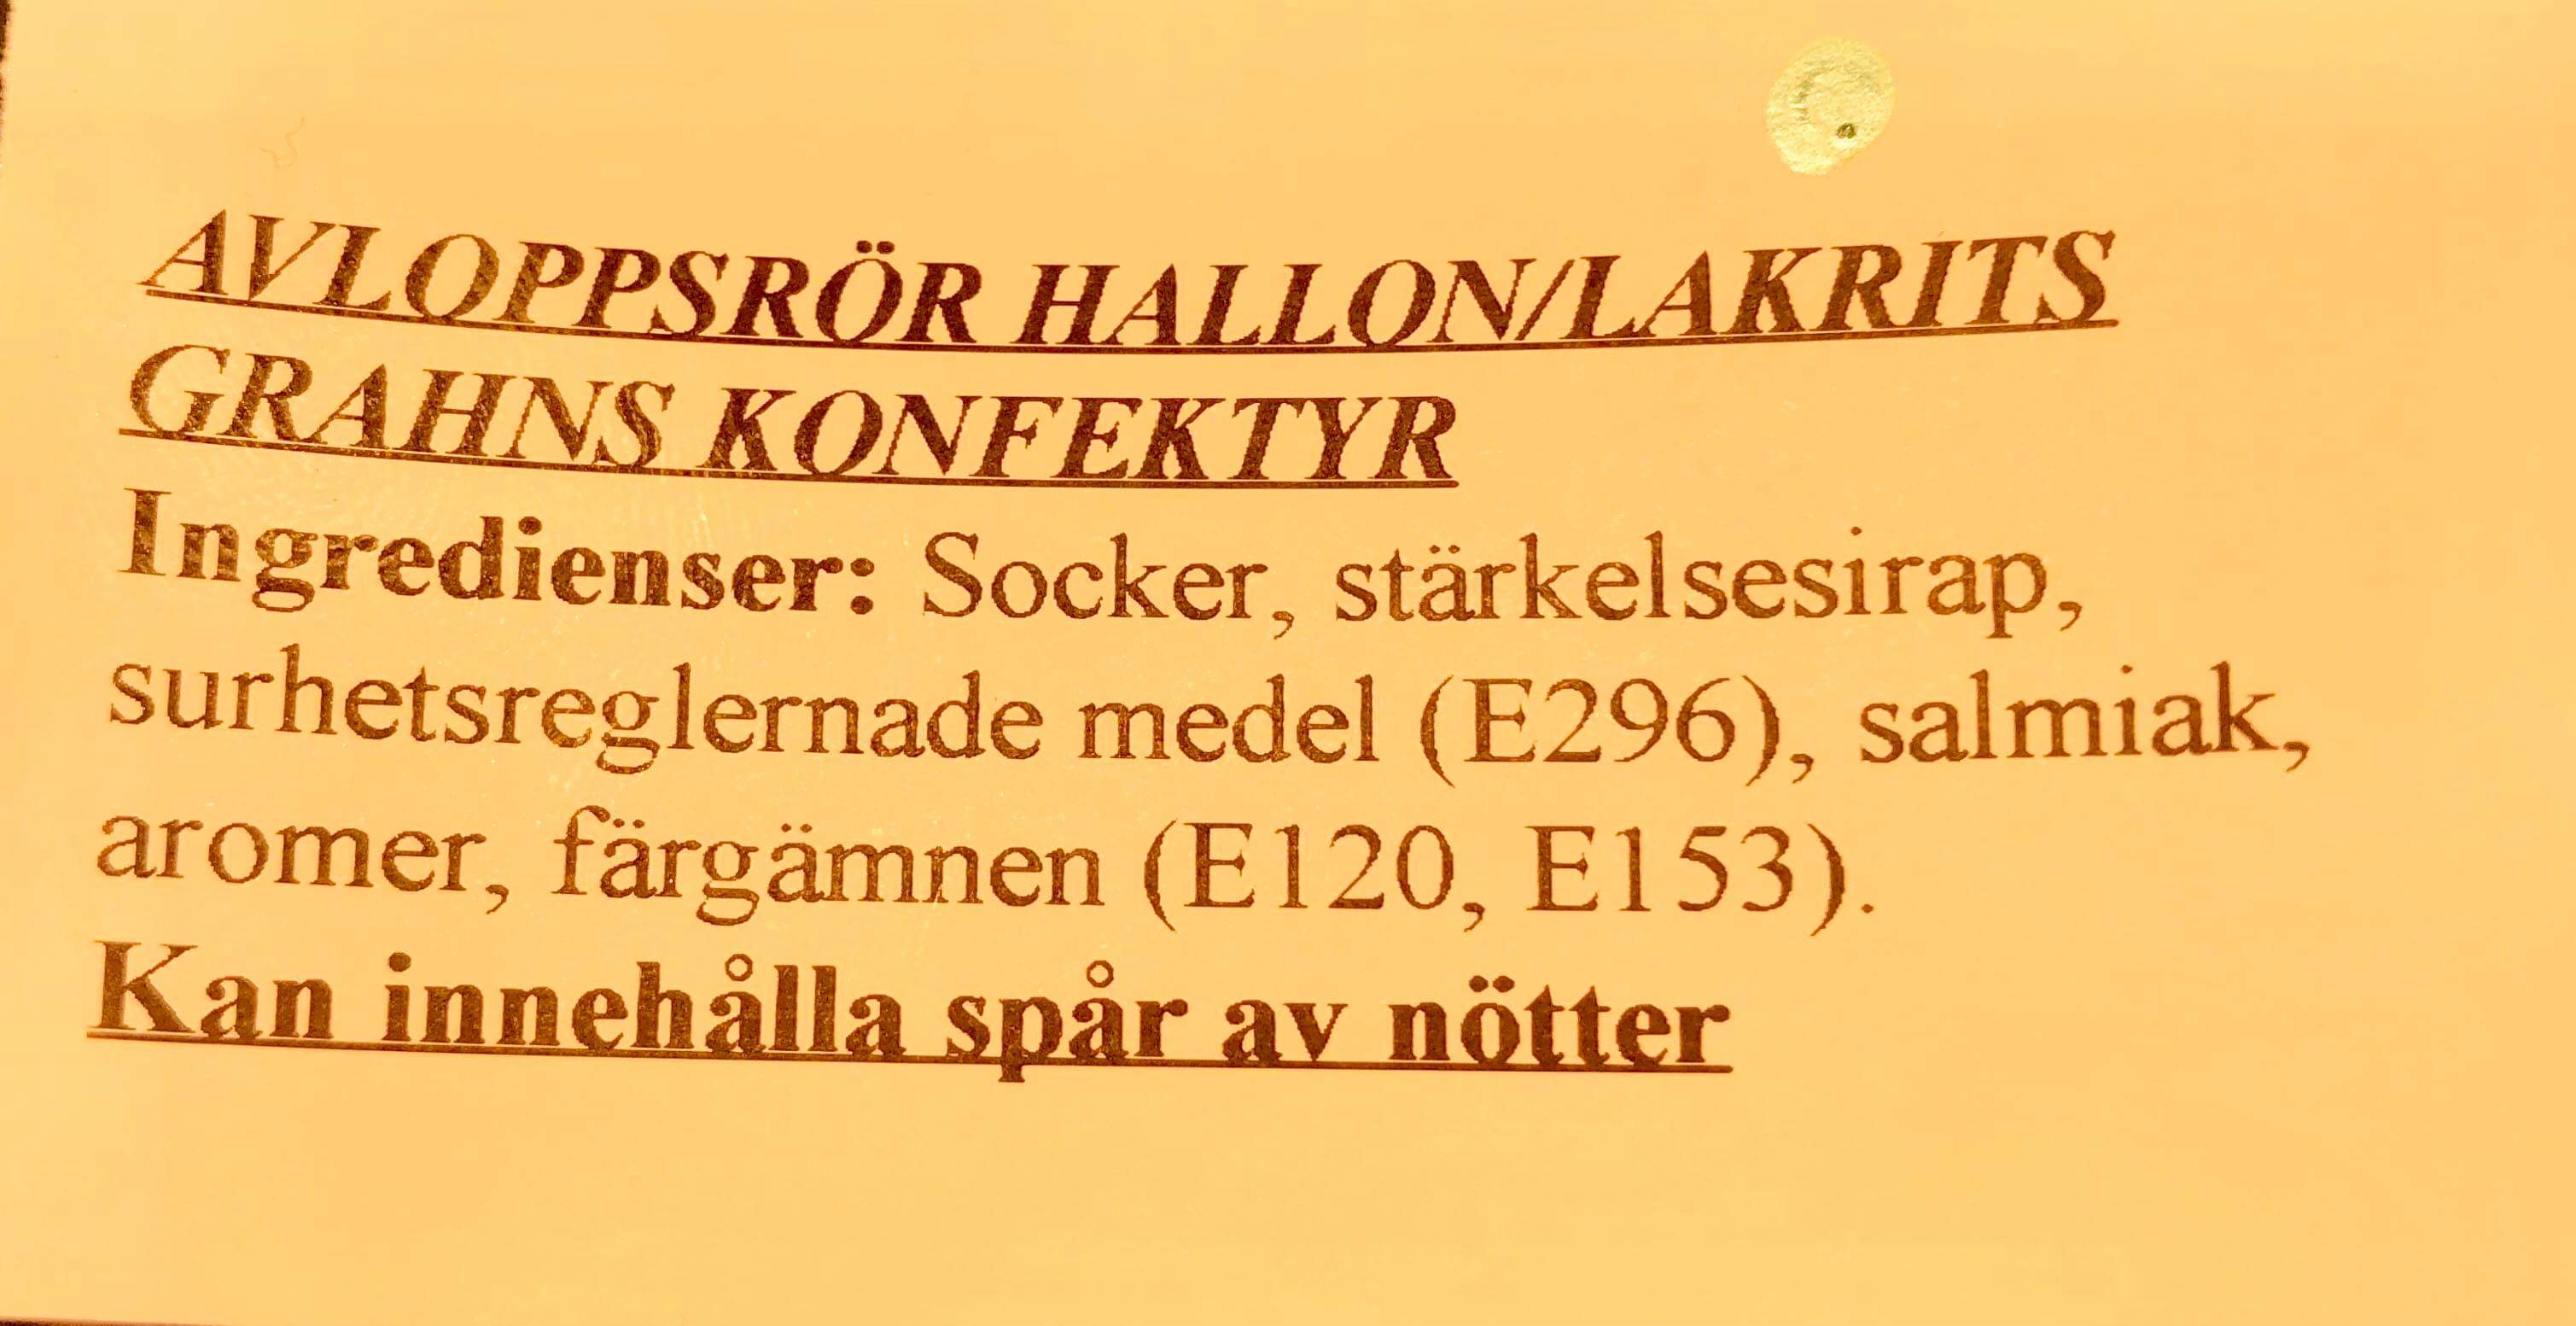 Avloppsrr hallon/lakrits